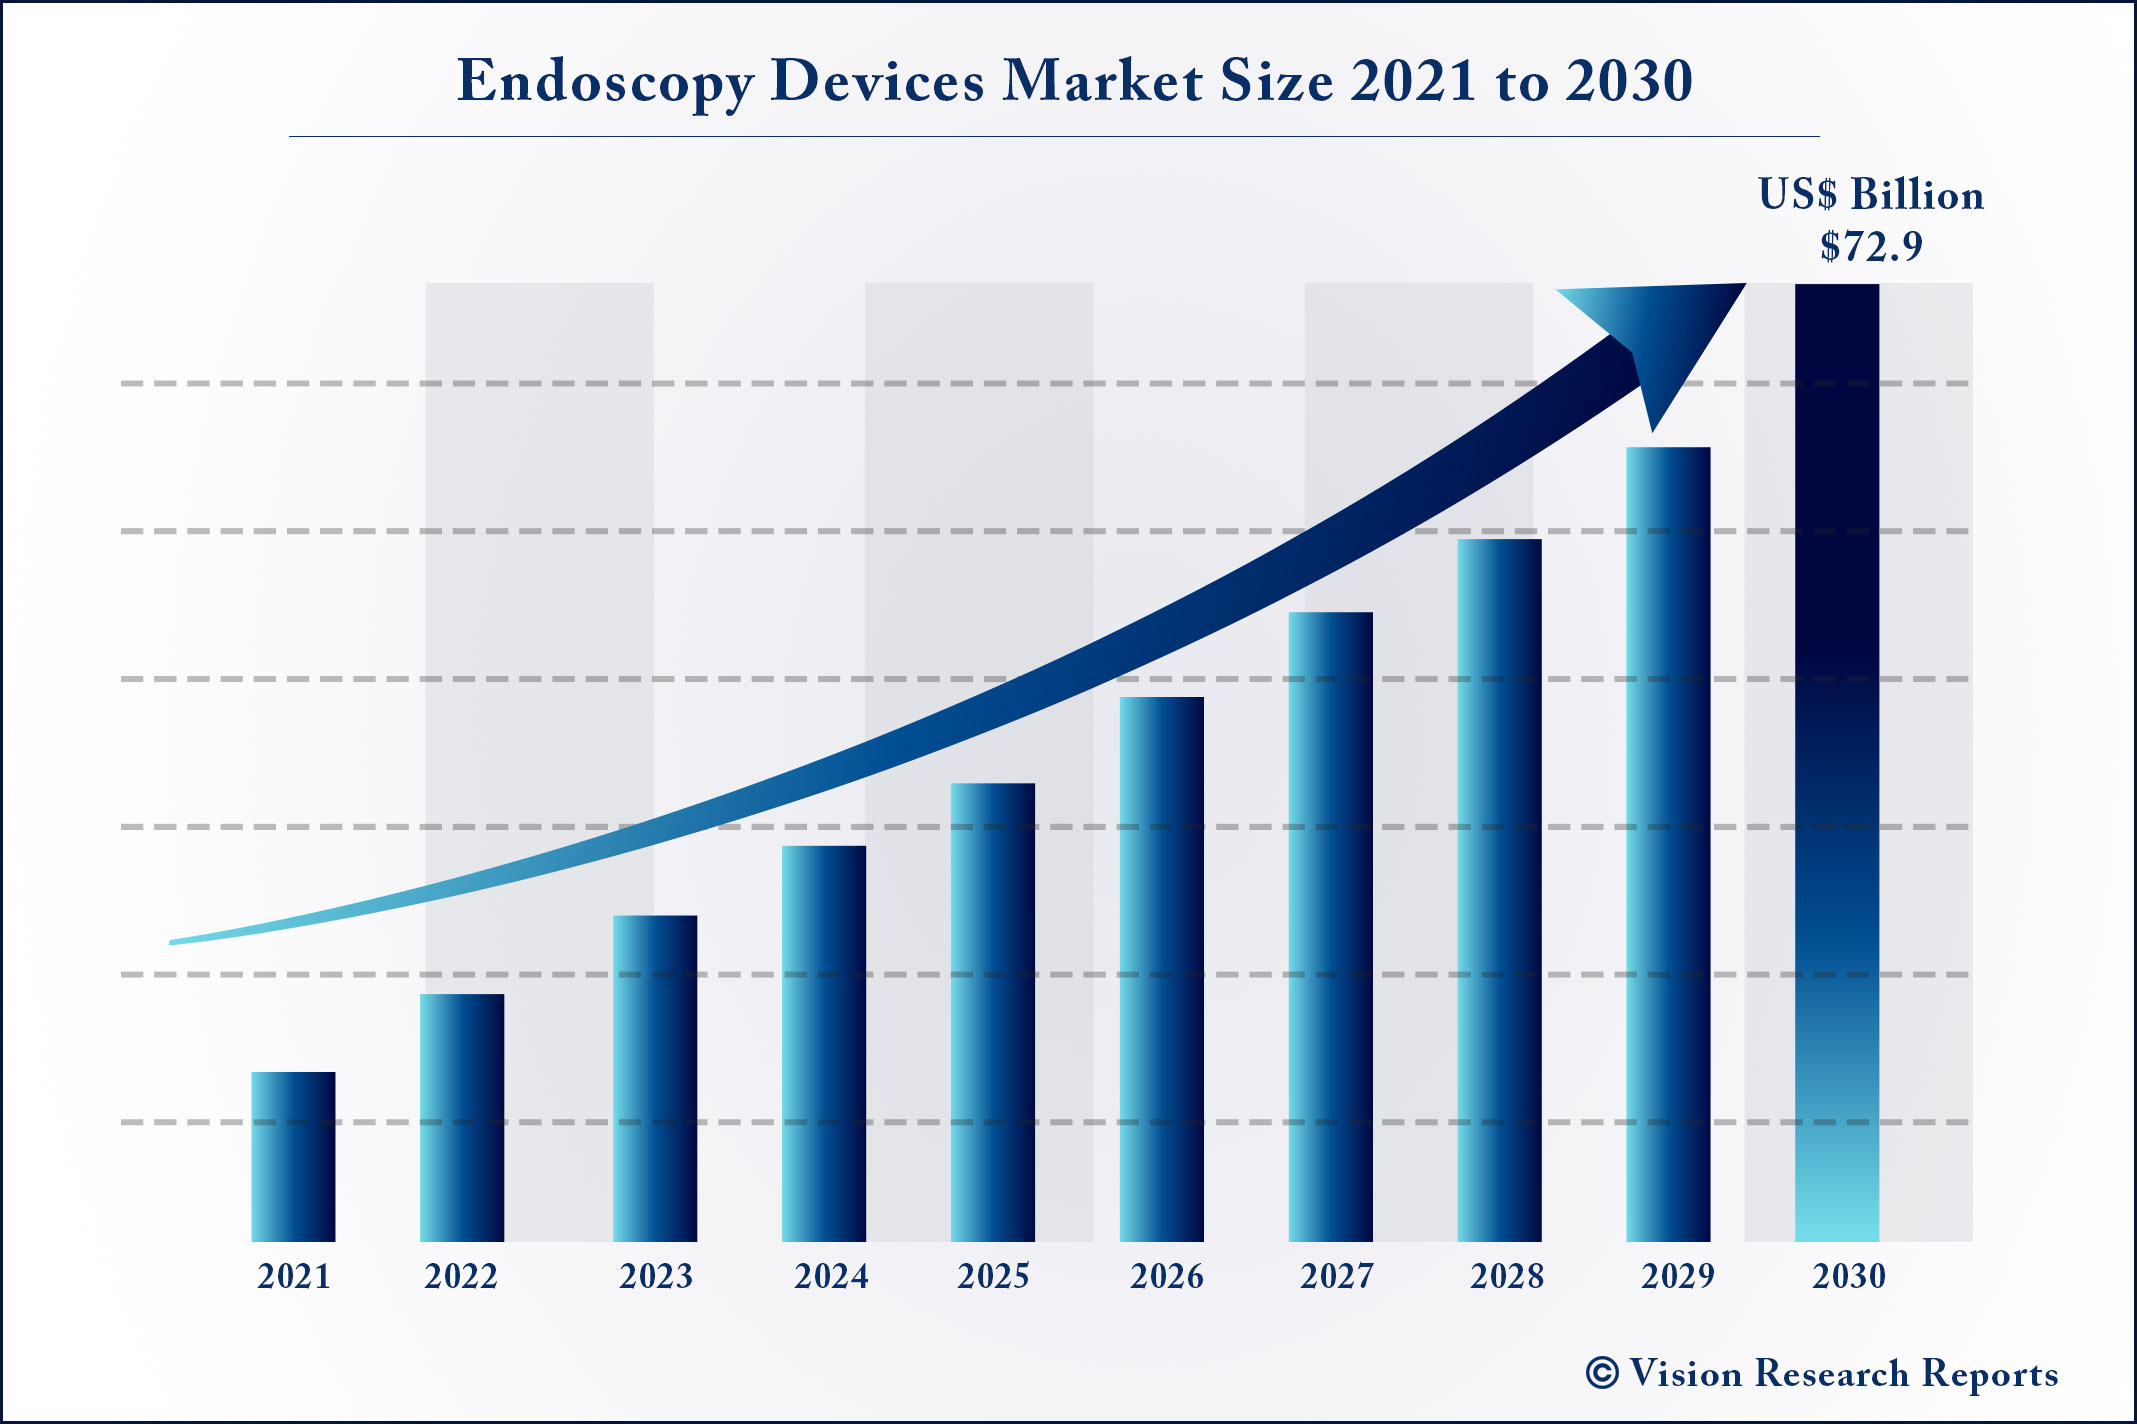 Endoscopy Devices Market Size 2021 to 2030